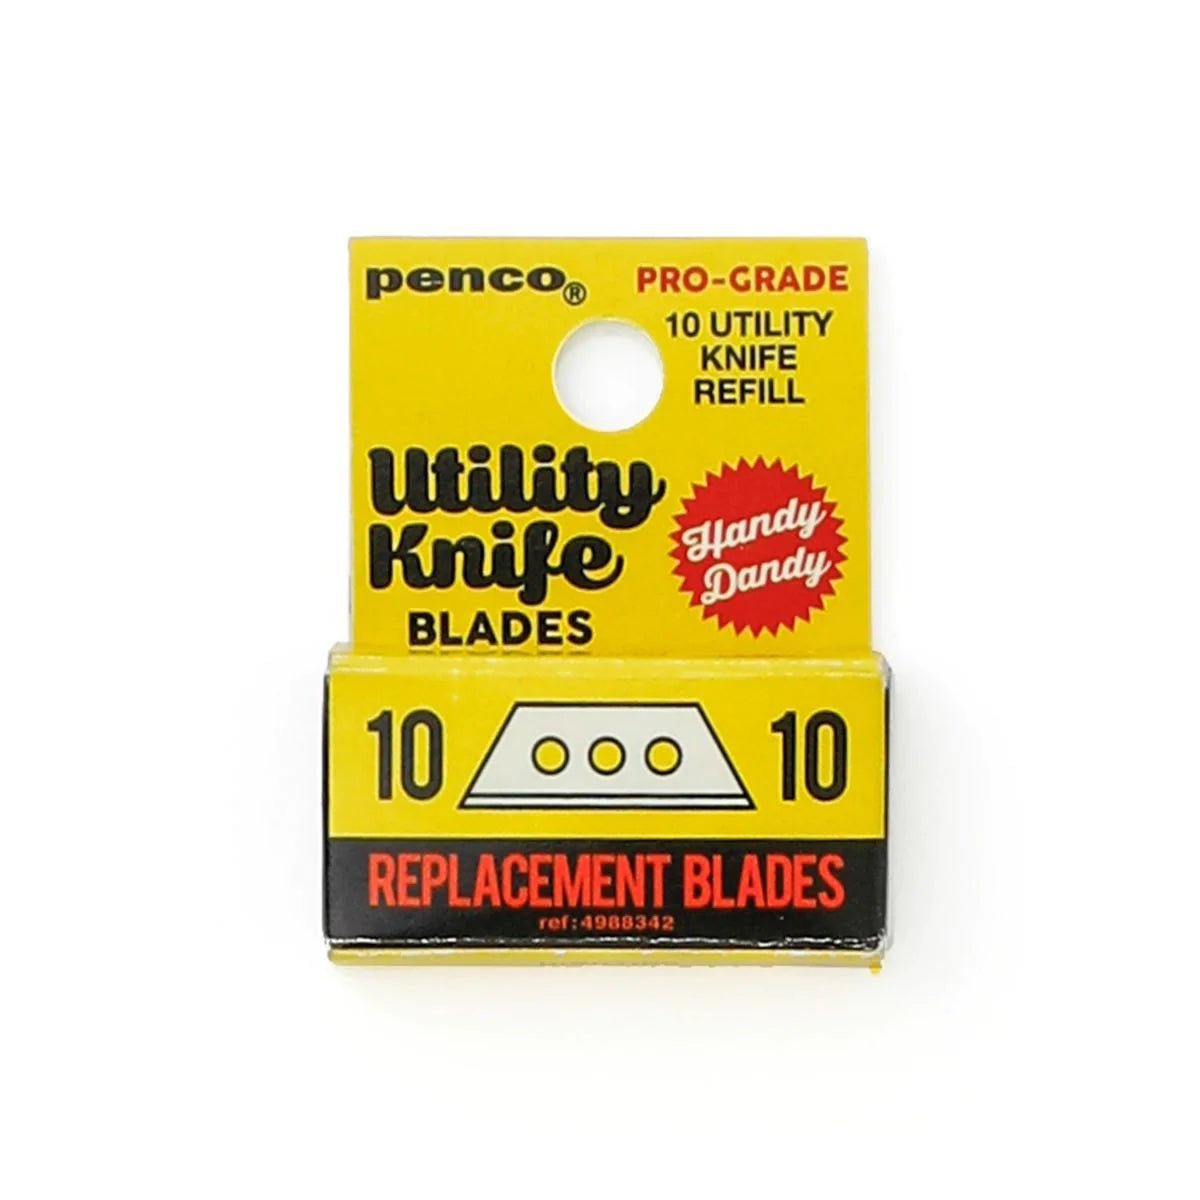 PENCO Utility Knife Refill